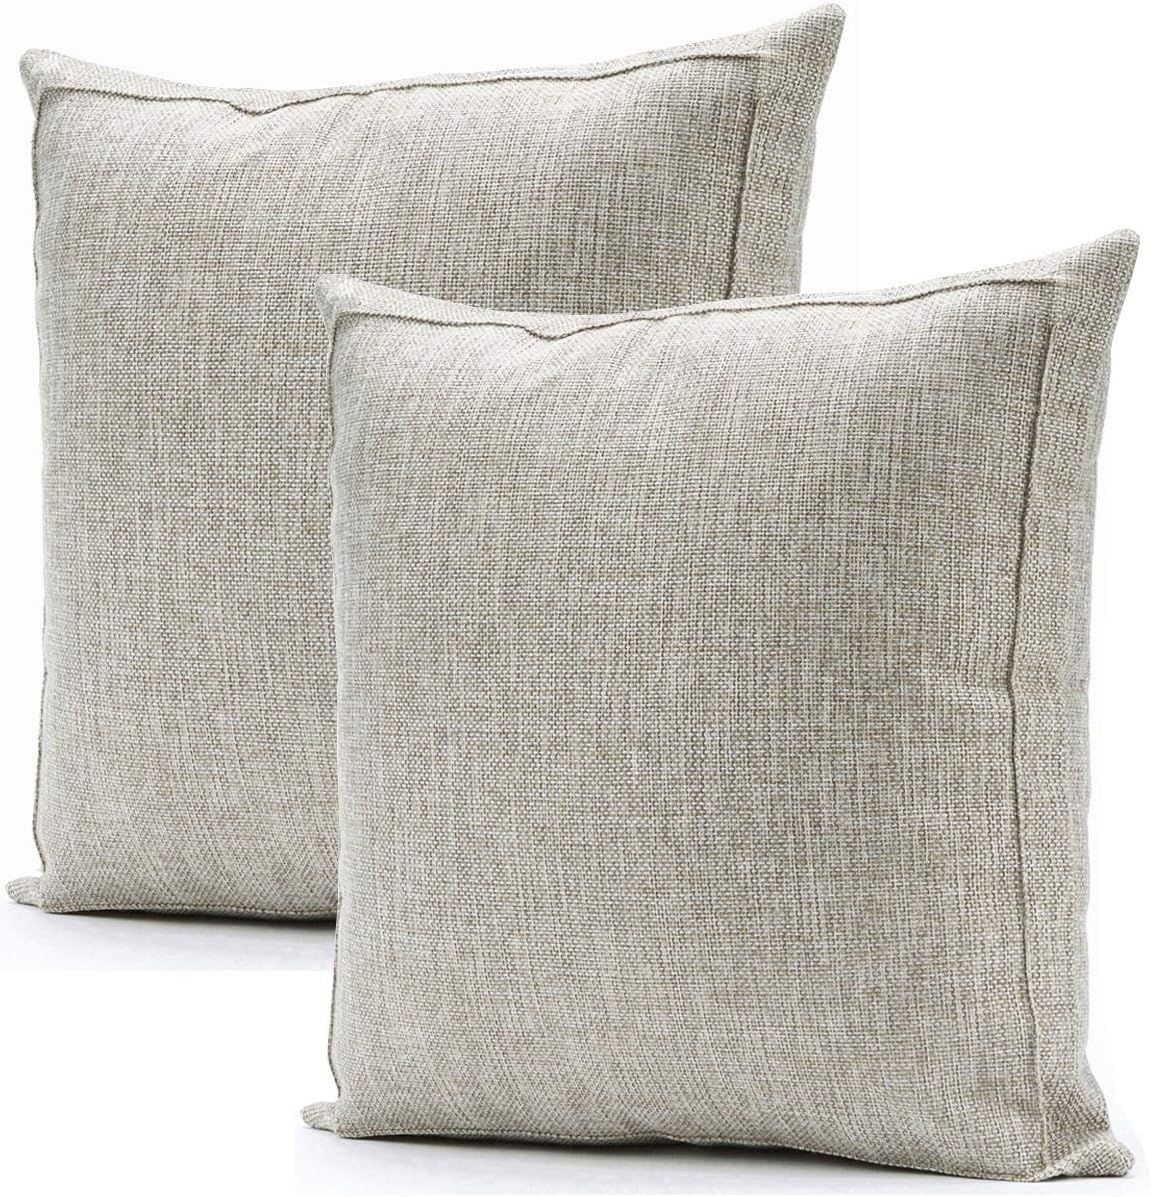 Jepeak Pack of 2 Burlap Linen Throw Pillow Covers Square Cushion Cases Farmhouse Modern Decorativ... | Amazon (US)